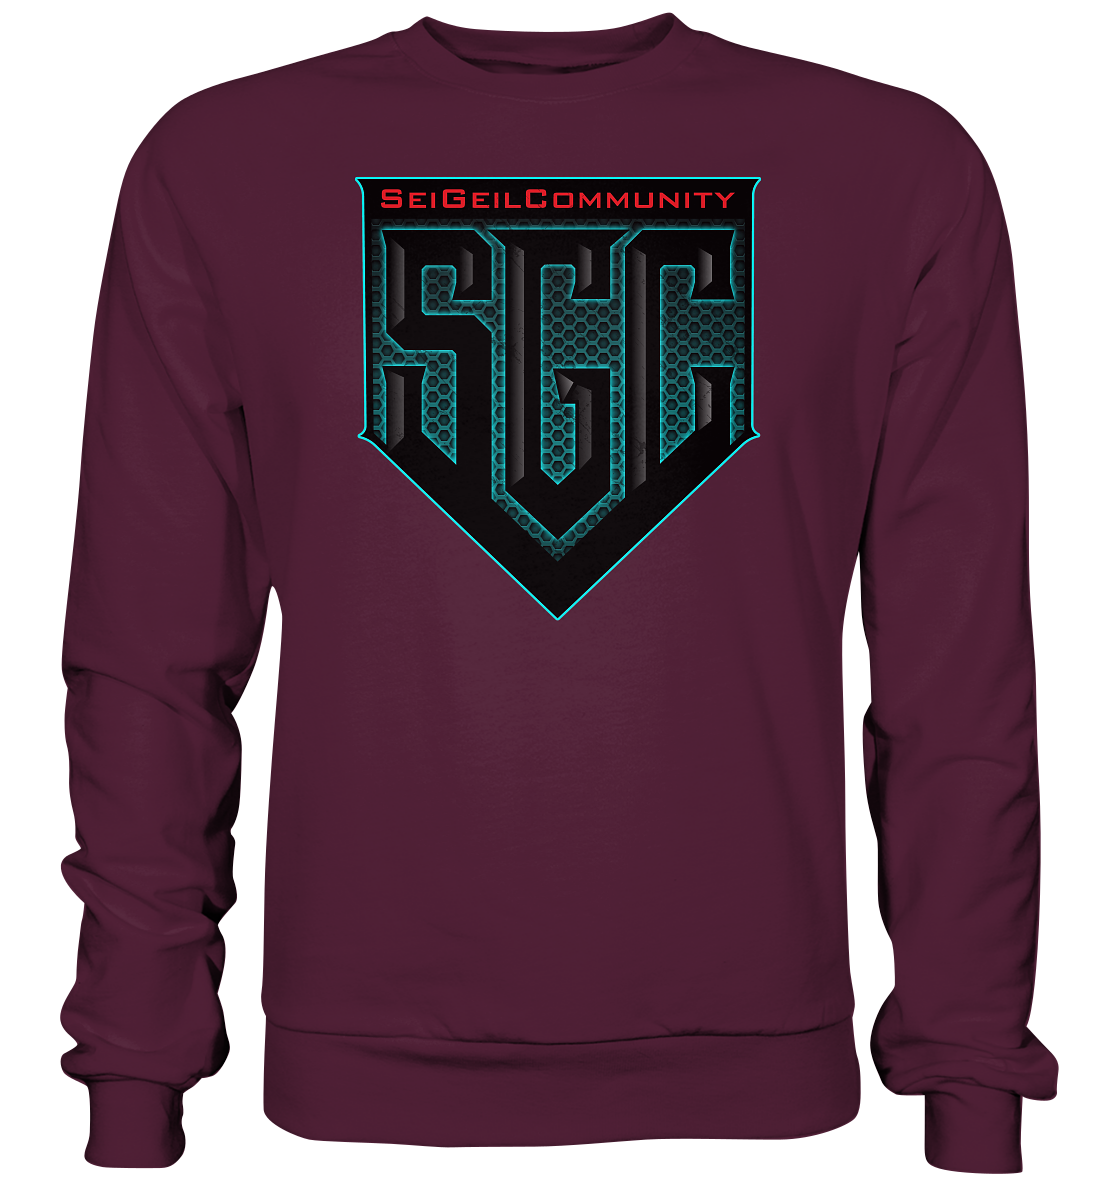 SEI GEIL COMMUNITY - Basic Sweatshirt